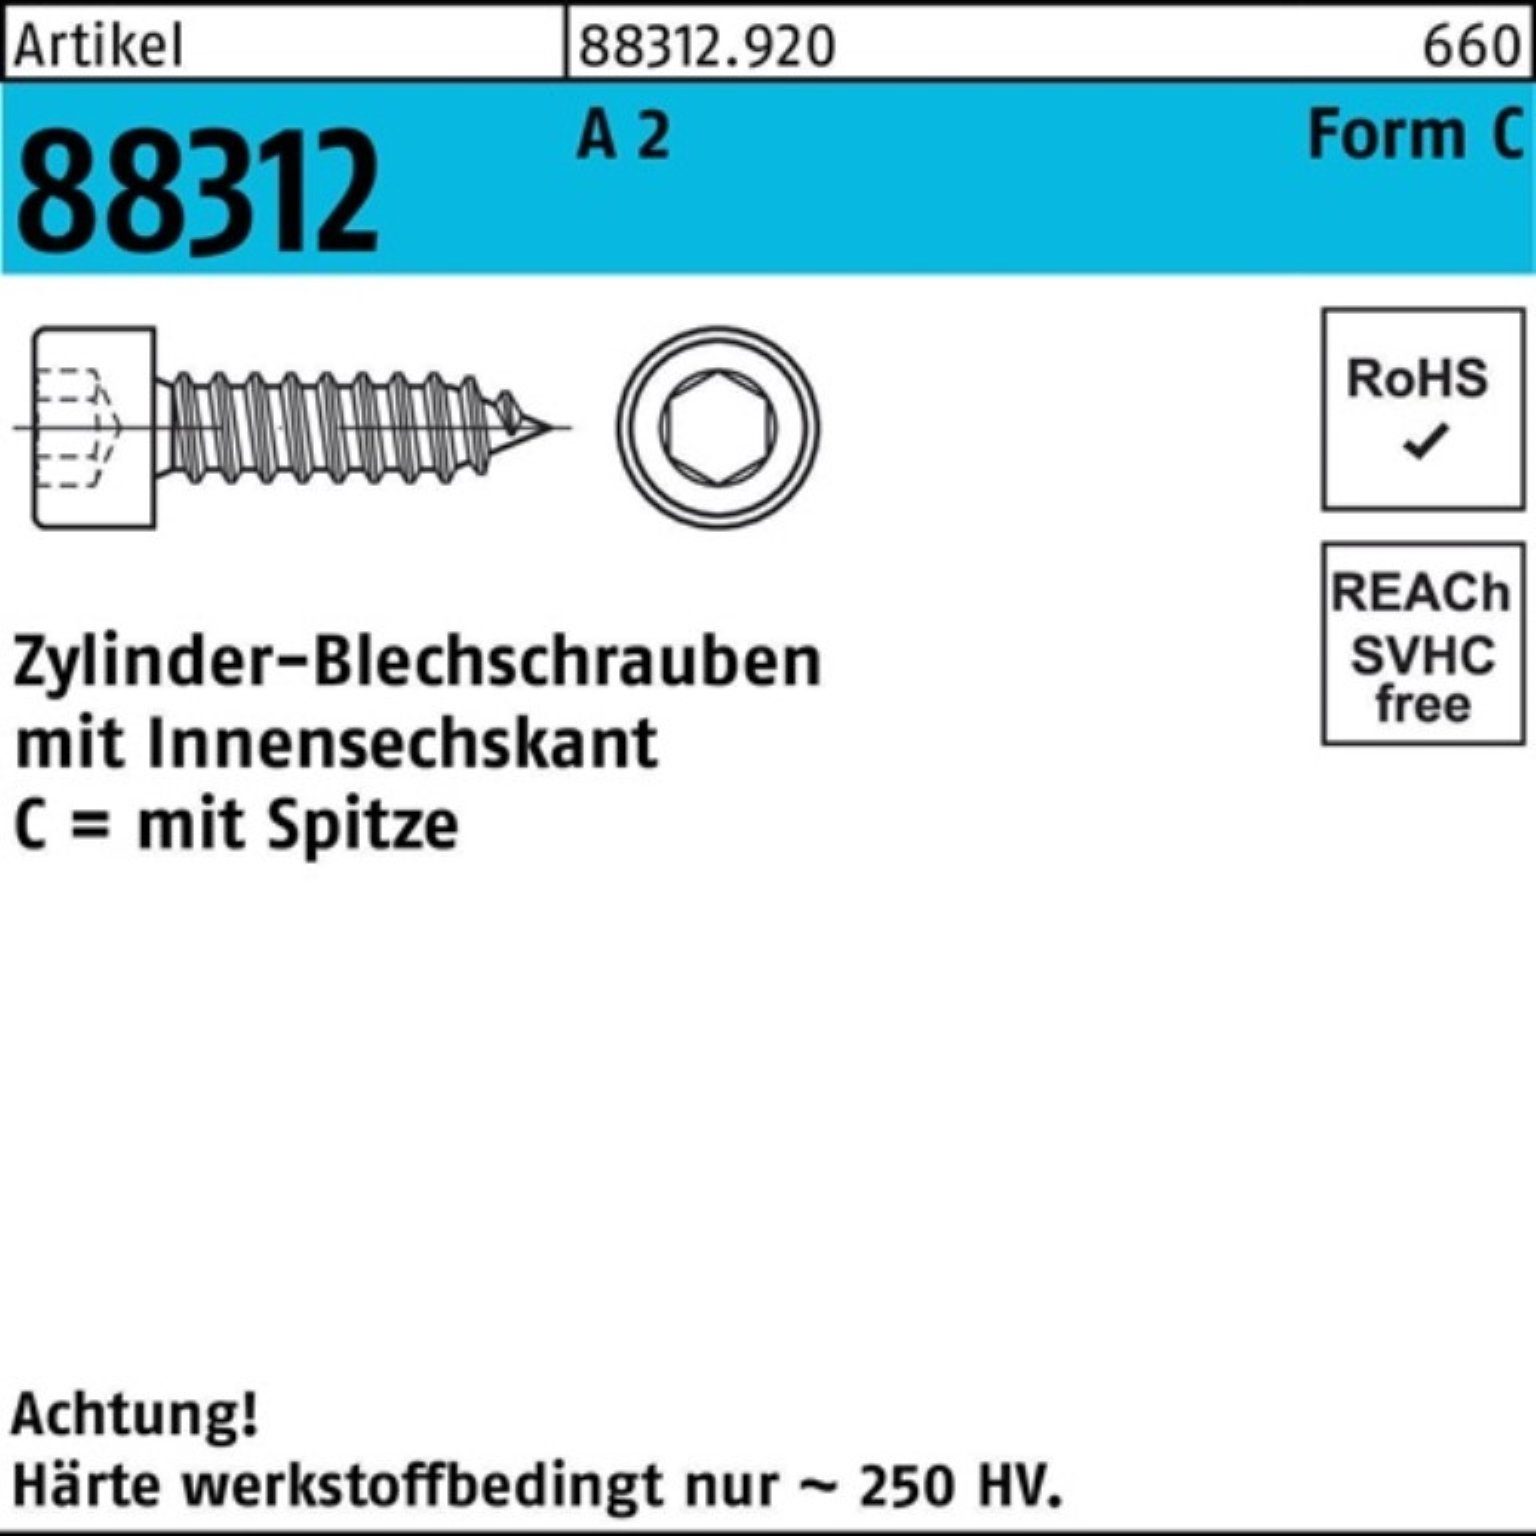 Reyher Blechschraube 200er Pack Zylinderblechschraube R 88312 Spitze/Innen-6kt C 4,8x 22 A